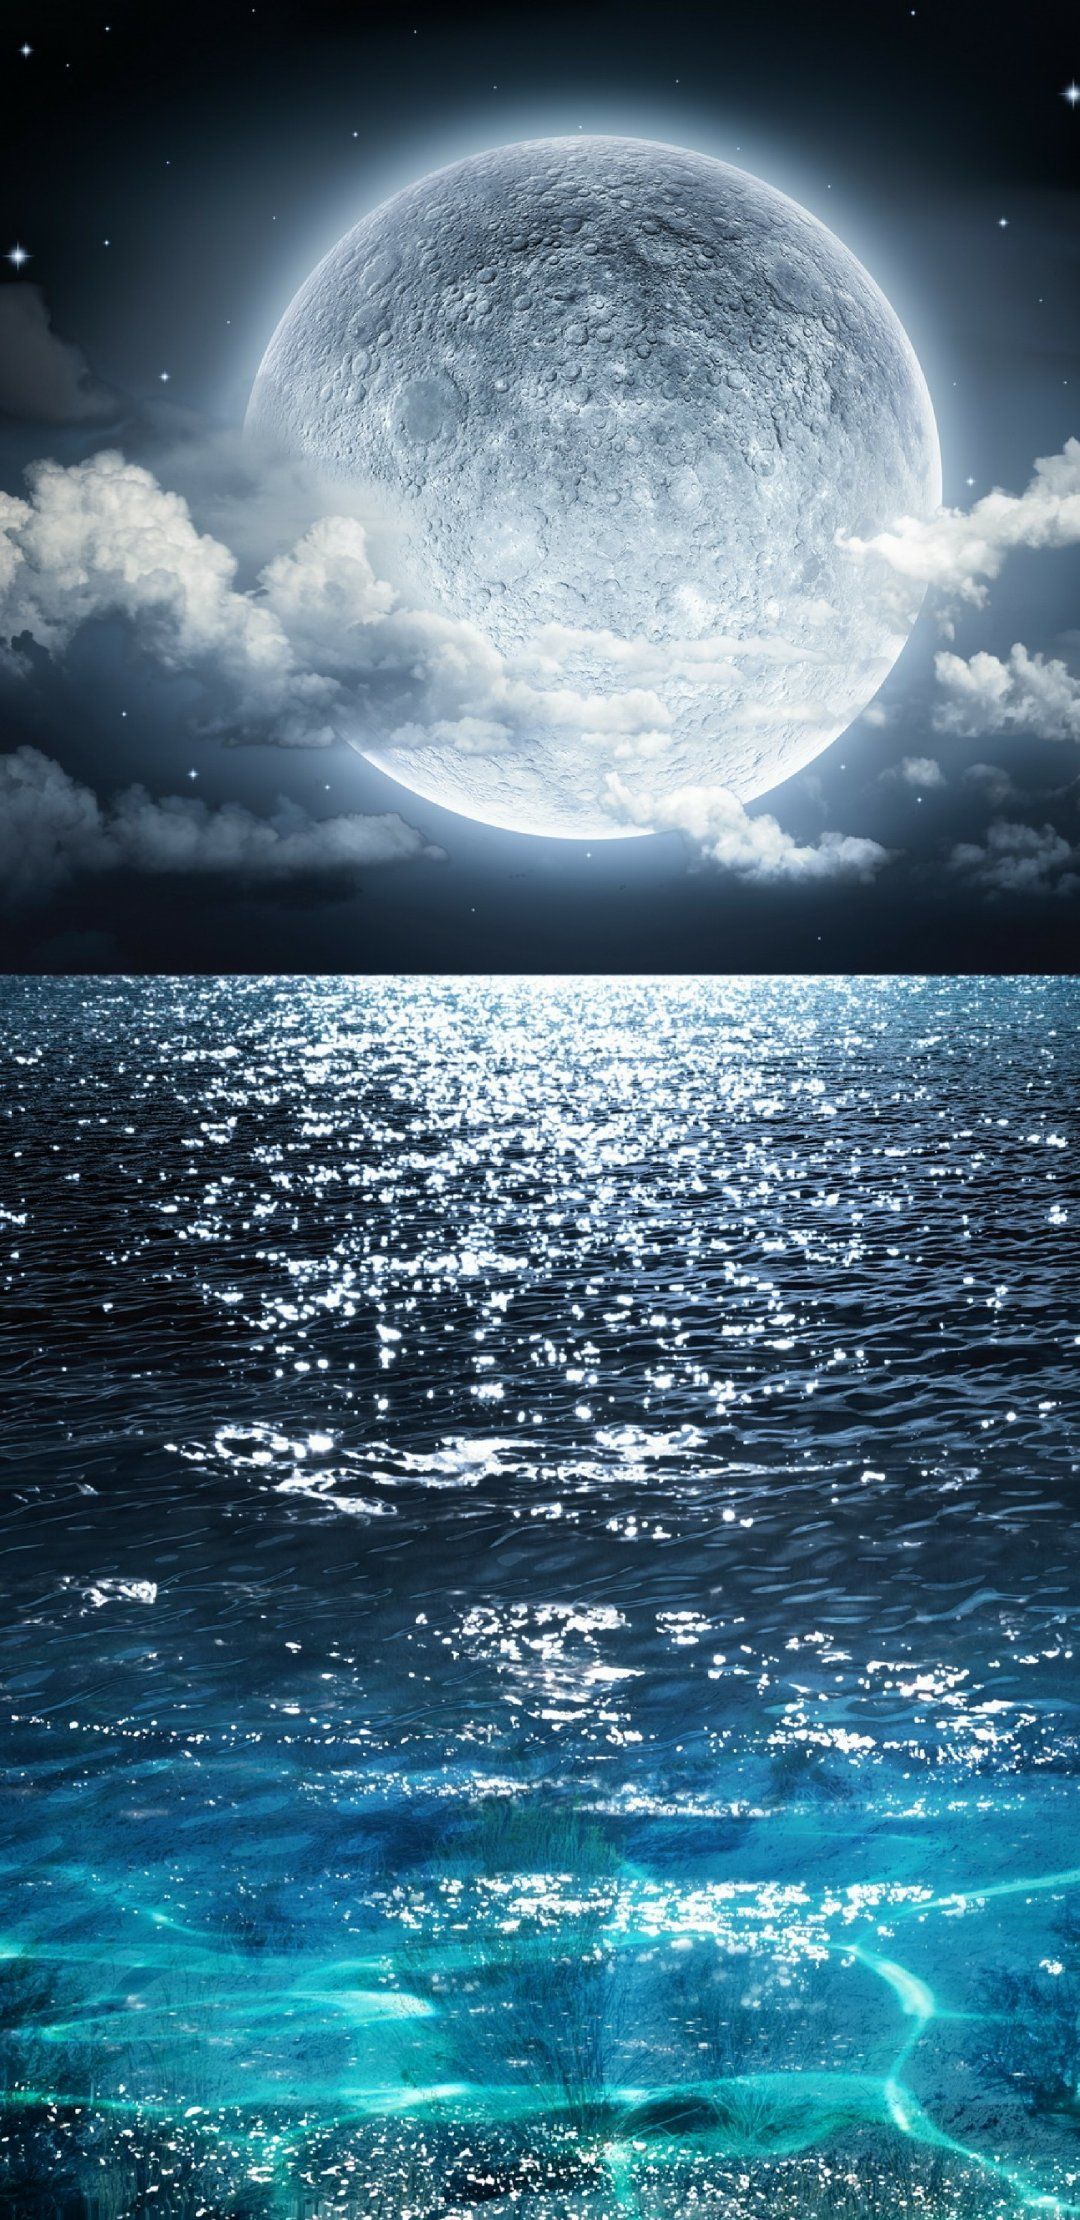 Ocean moon. Nature iphone wallpaper